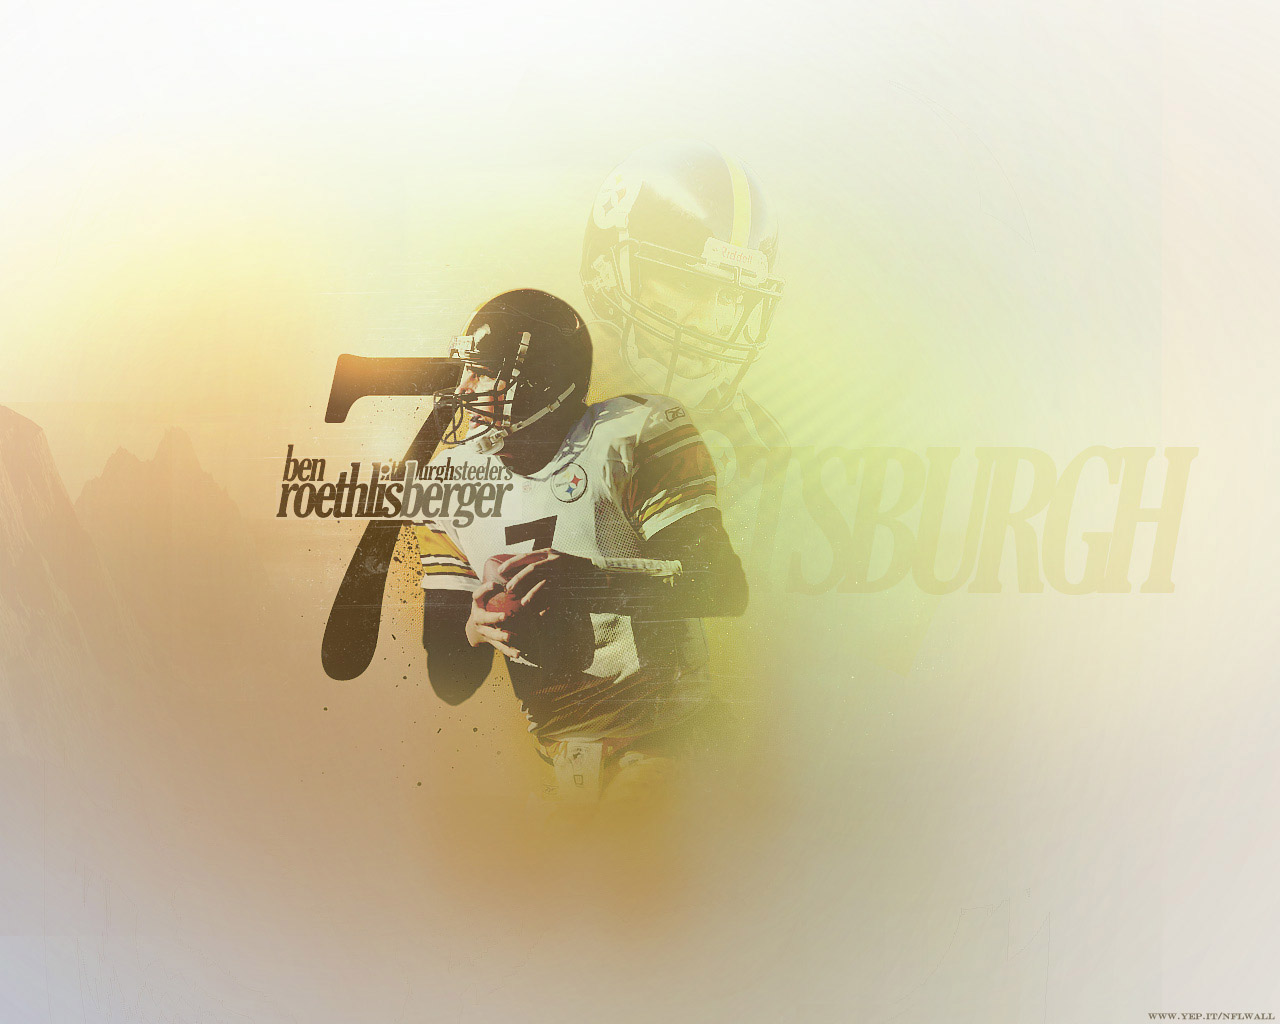 Roethlisberger Ben wallpaper, Pittsburgh Steelers wallpaper, nfl ...